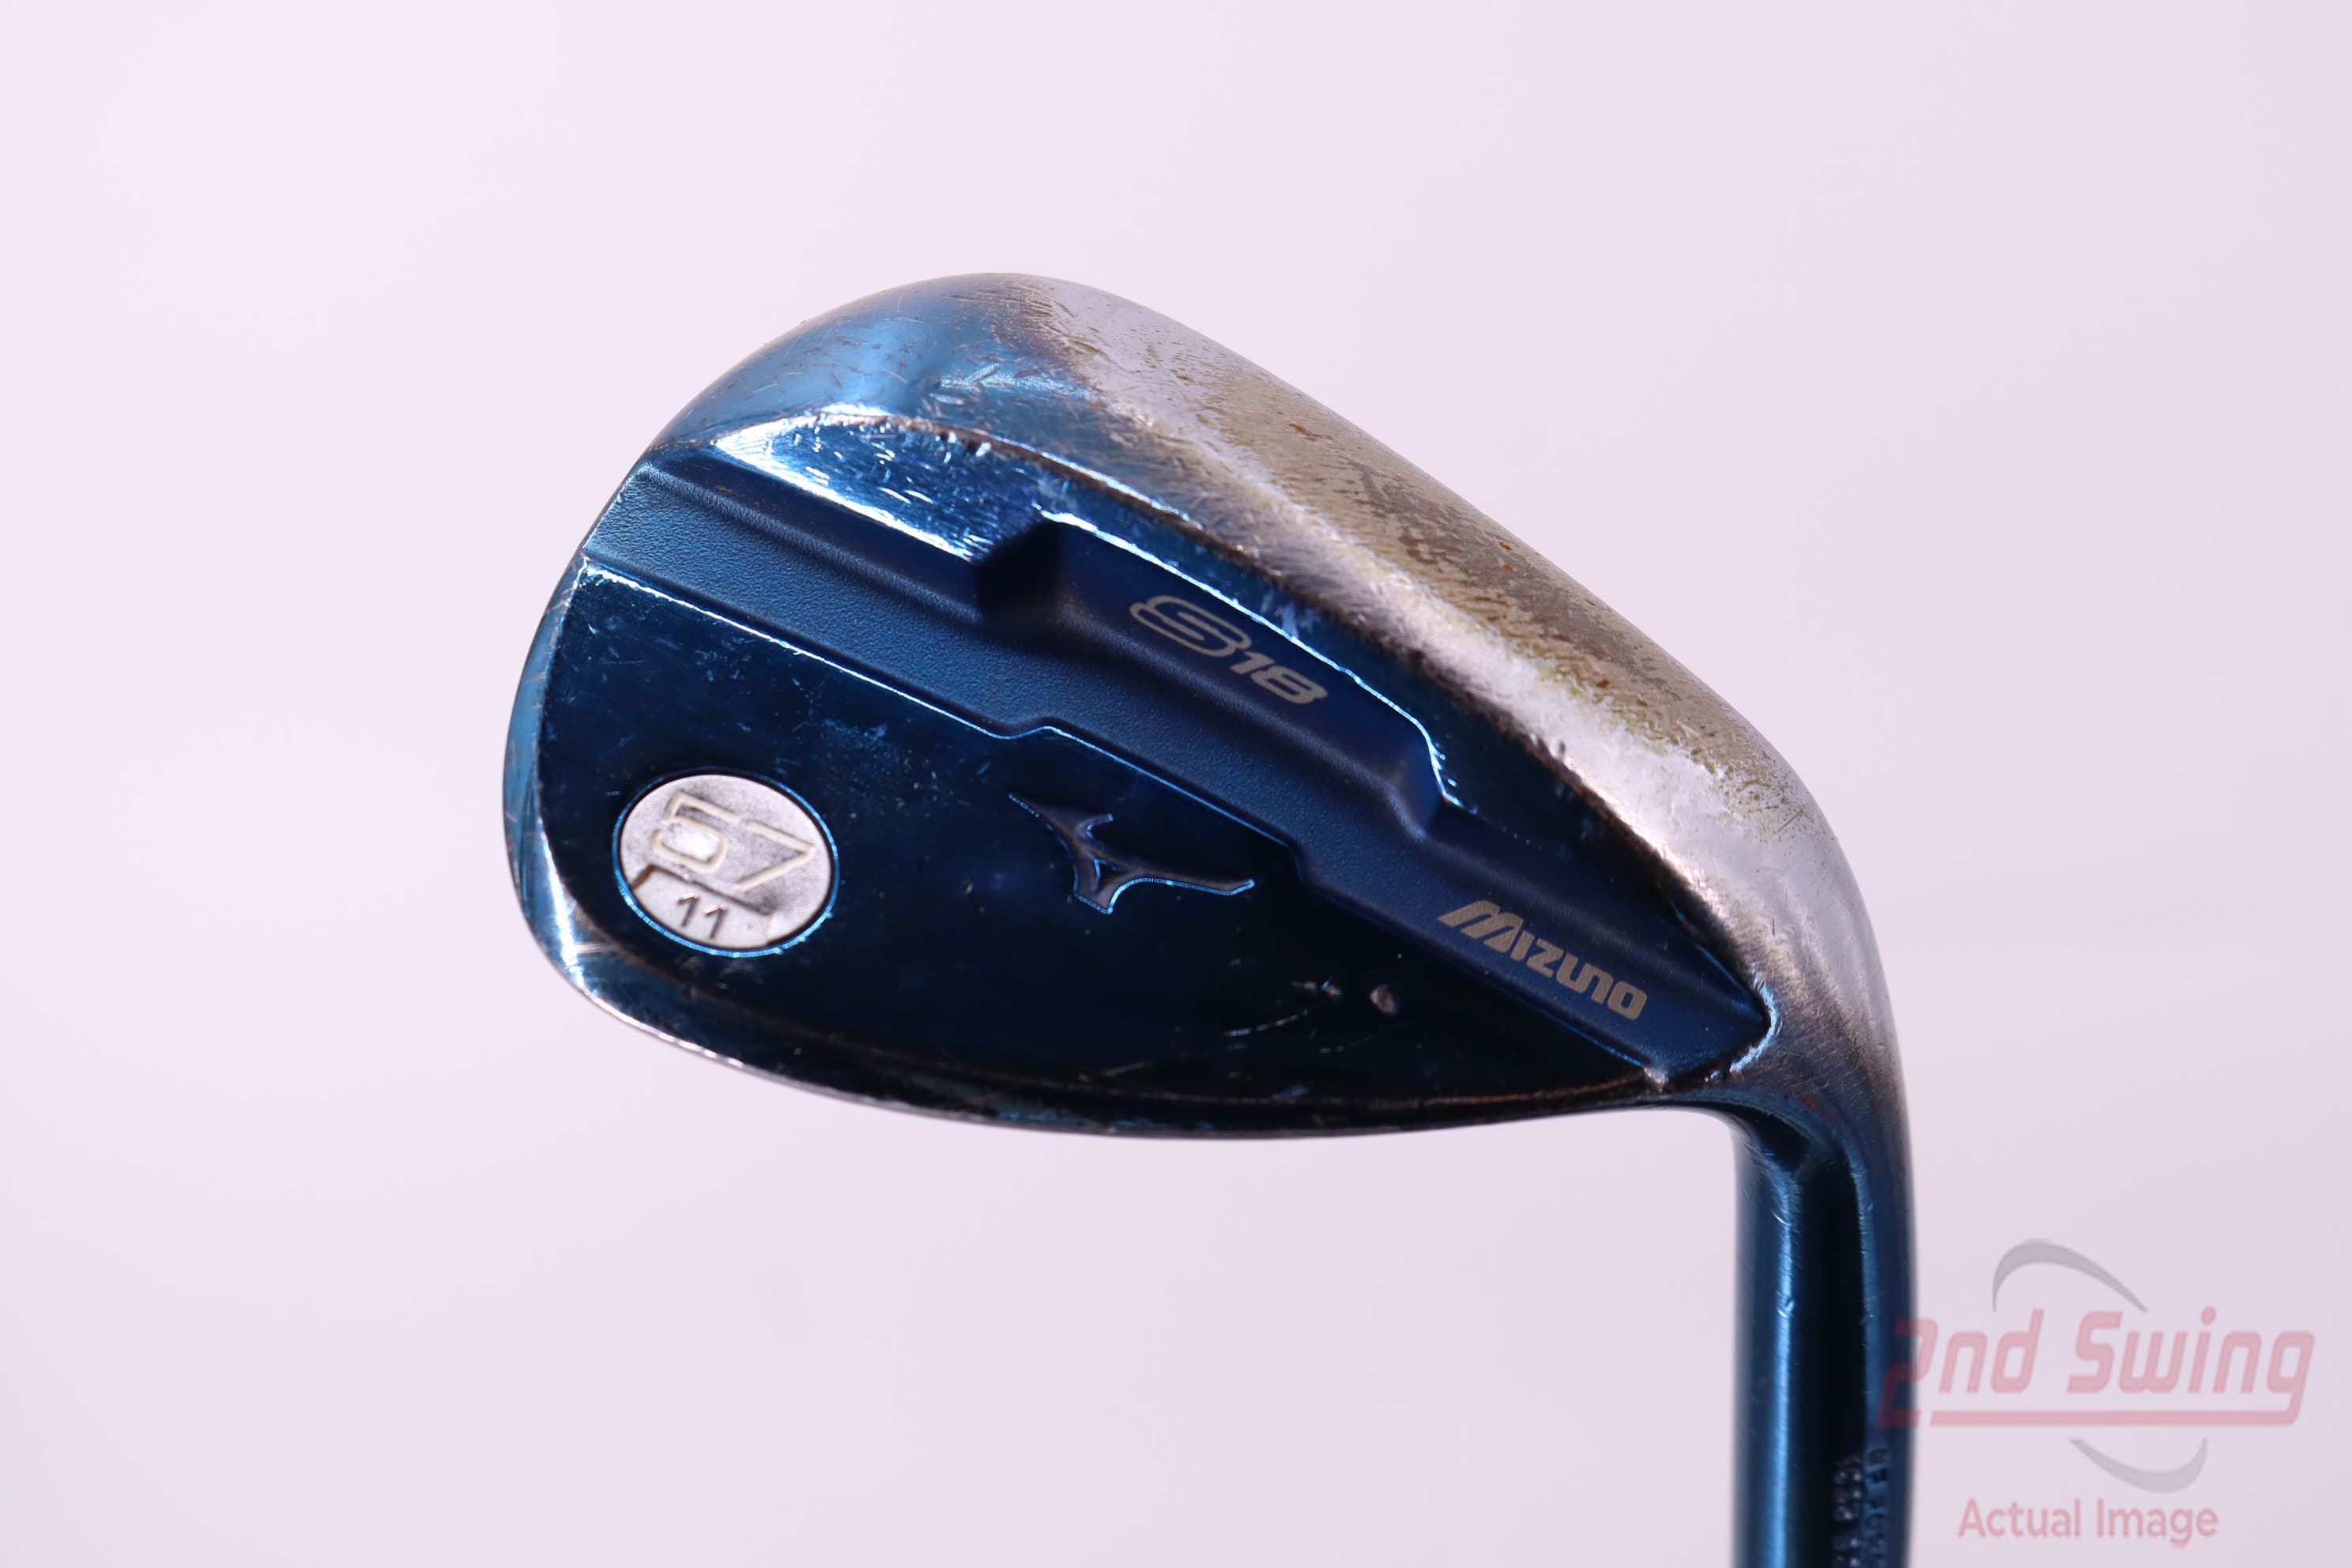 Mizuno S18 Blue Ion Wedge | 2nd Swing Golf